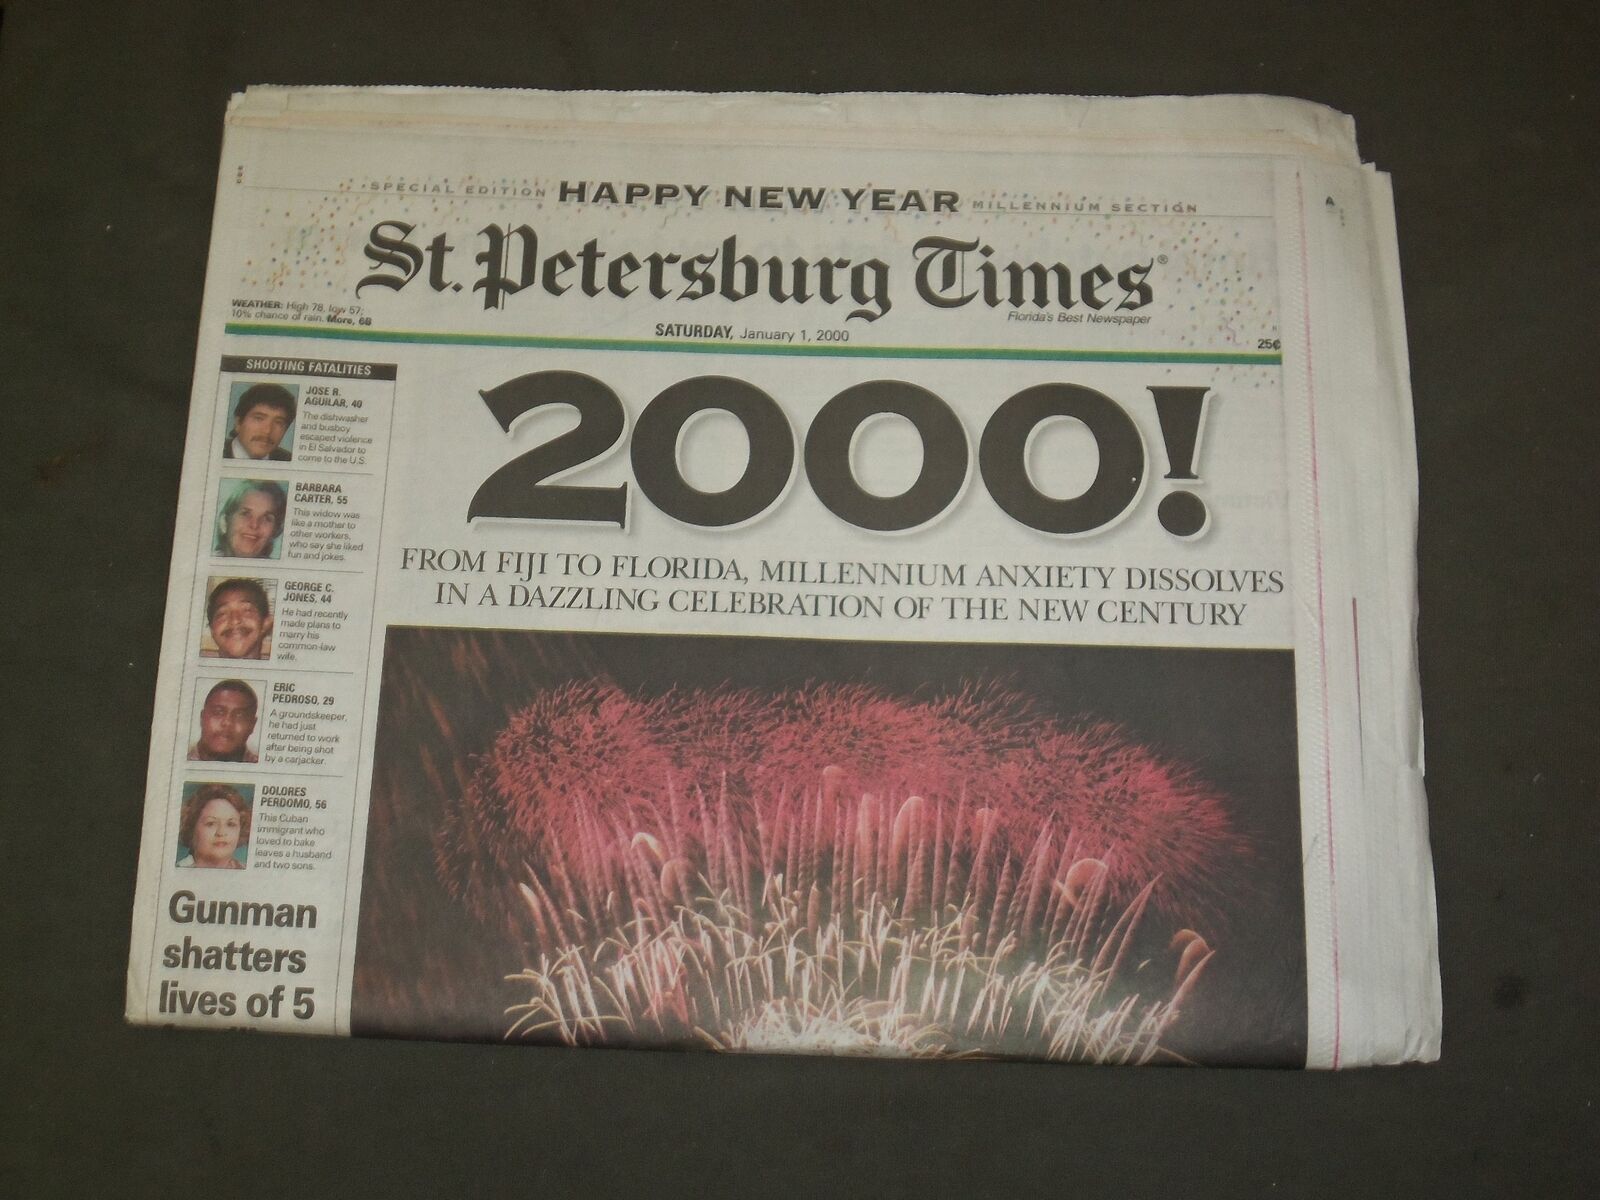 2000 JANUARY 1 ST. PETERSBURG TIMES NEWSPAPER - YEAR 2000 - NP 3192